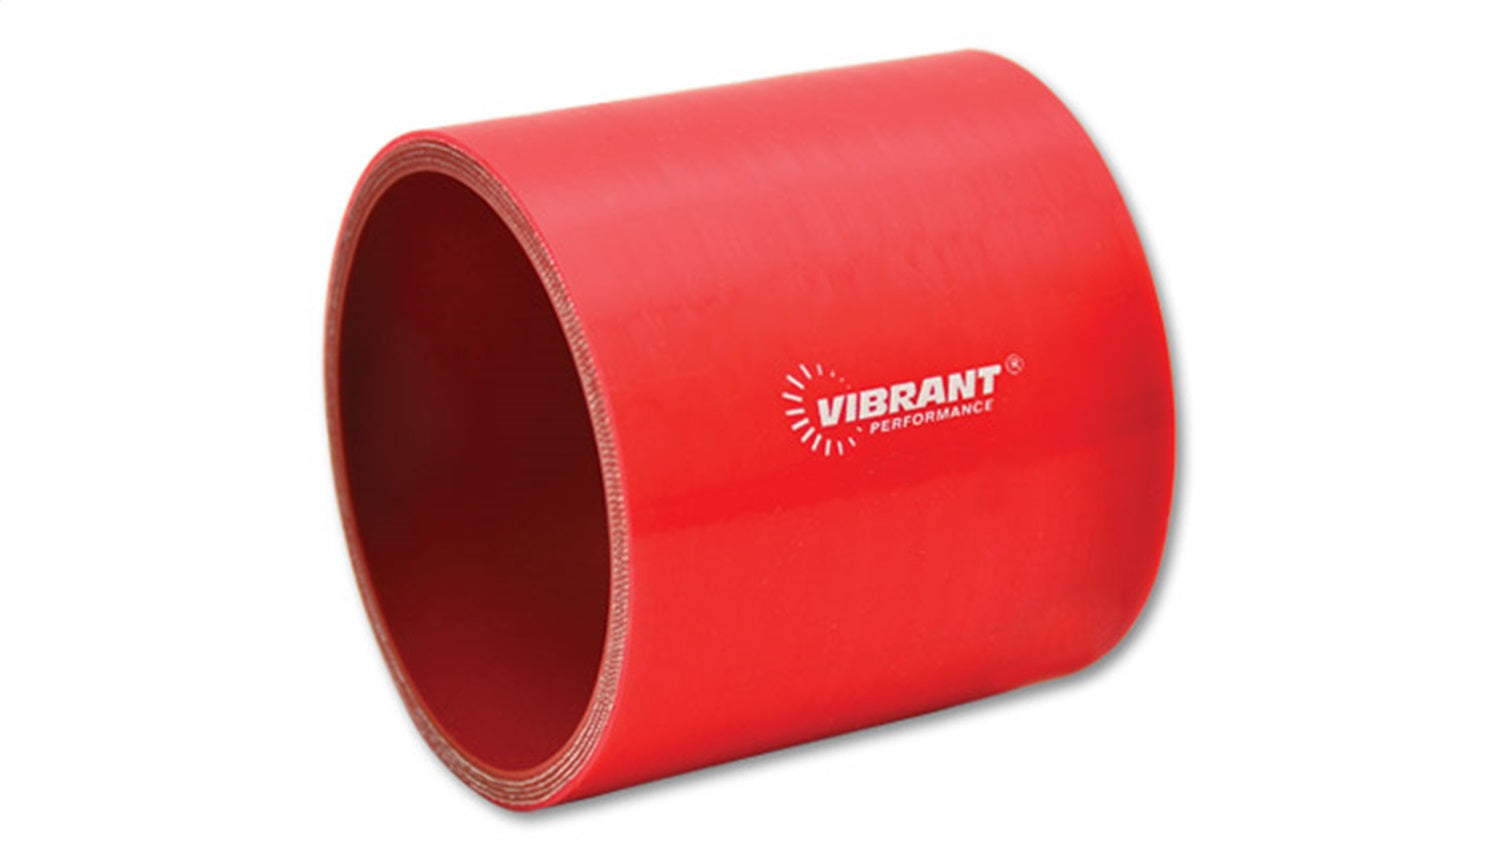 Vibrant Performance Straight Hose Coupler, 2.25" I.D. x 3.00" long - Red